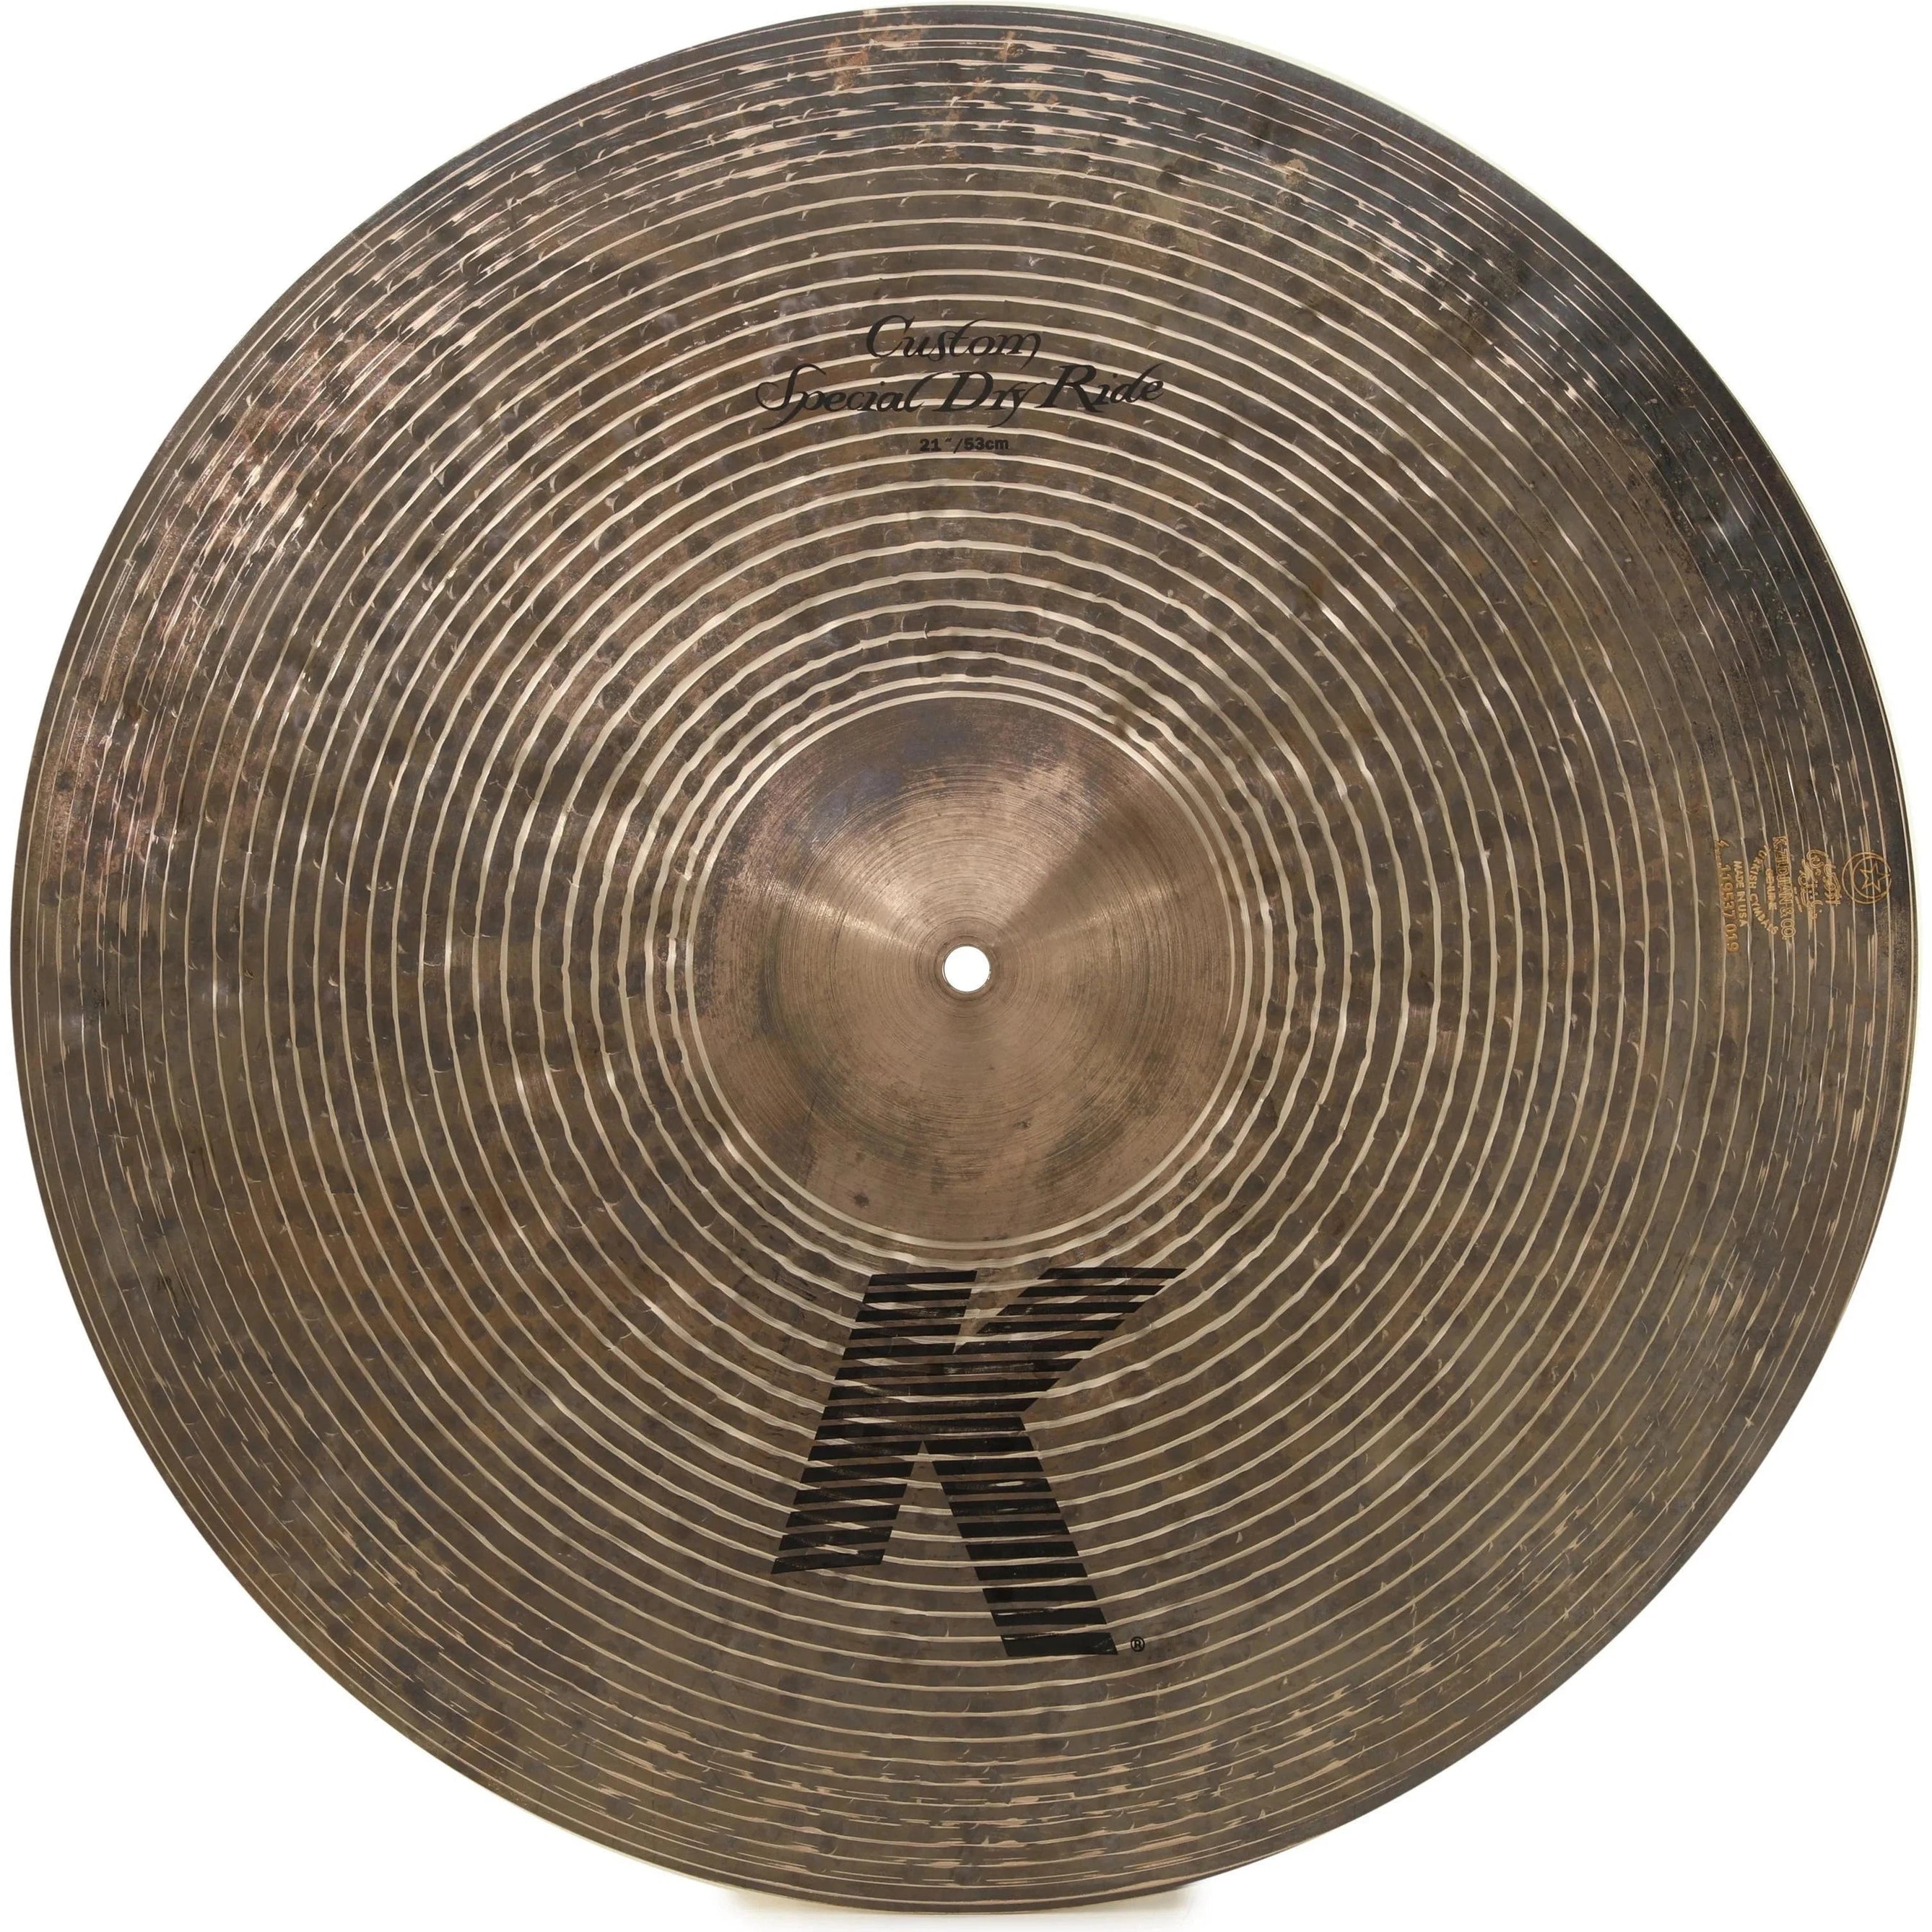 Ride Cymbal Zildjian K Custom Special Dry-Mai Nguyên Music